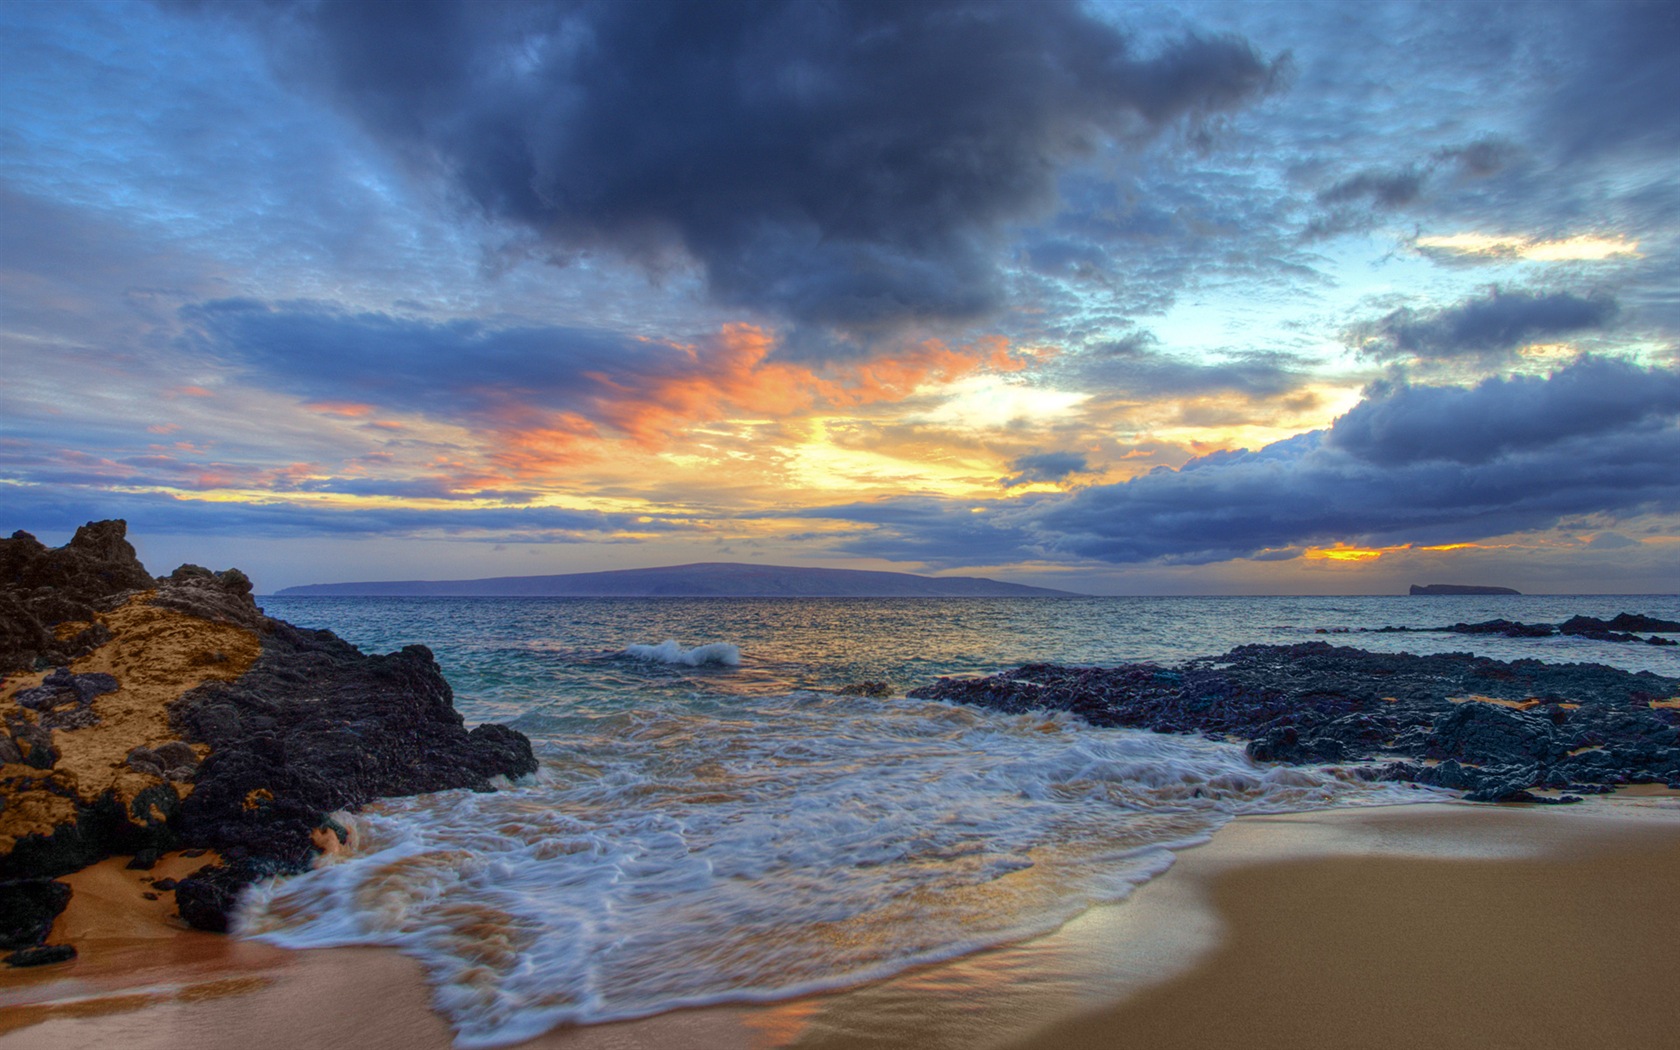 Windows 8 theme wallpaper: Beach sunrise and sunset views #9 - 1680x1050